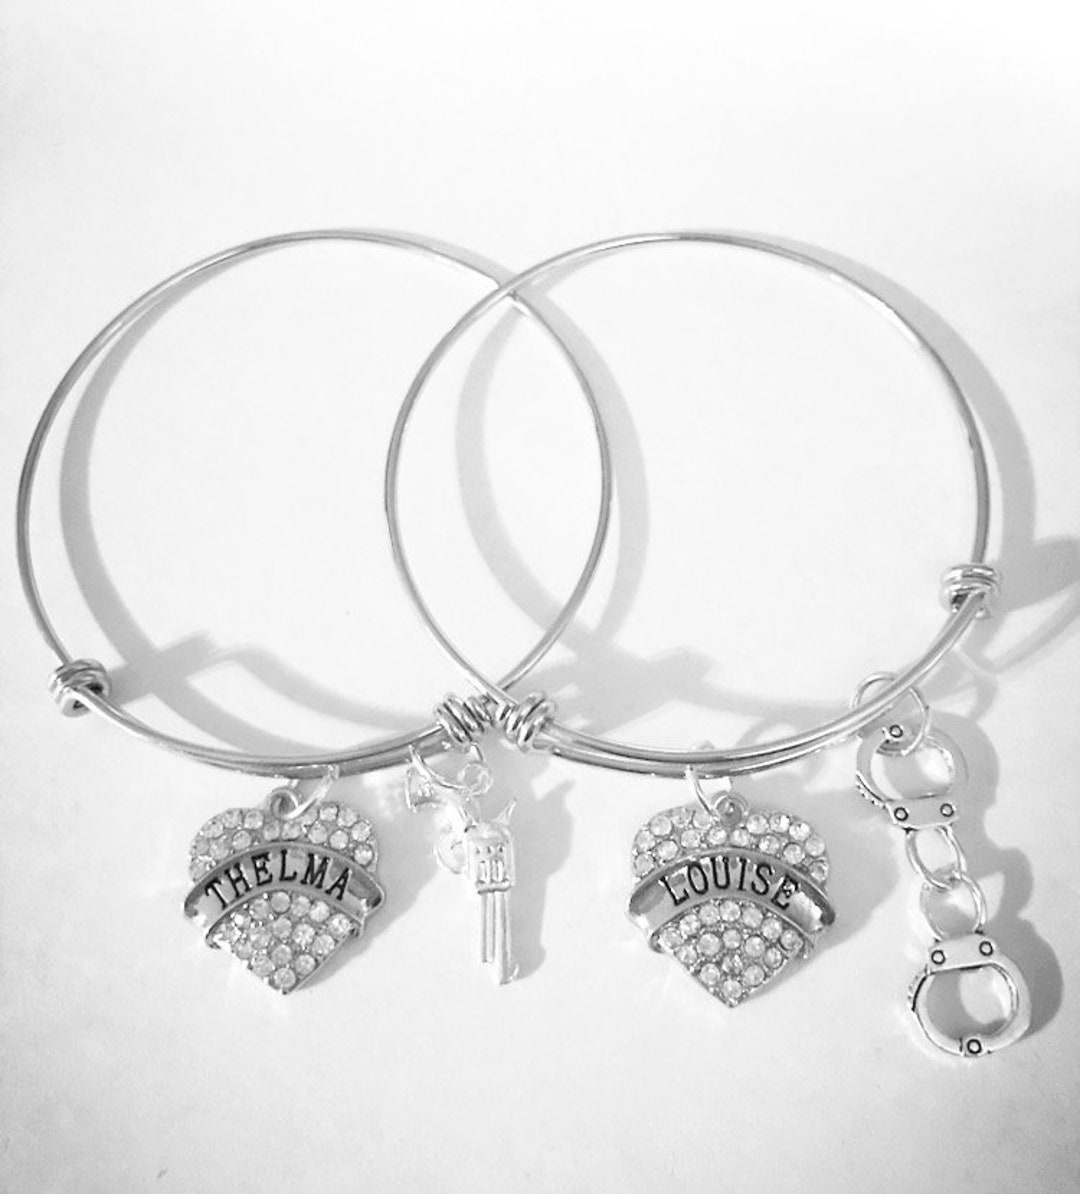 Best Friend Charm Bracelet Set Thelma Louise Friendship Sisters Gift Jewelry